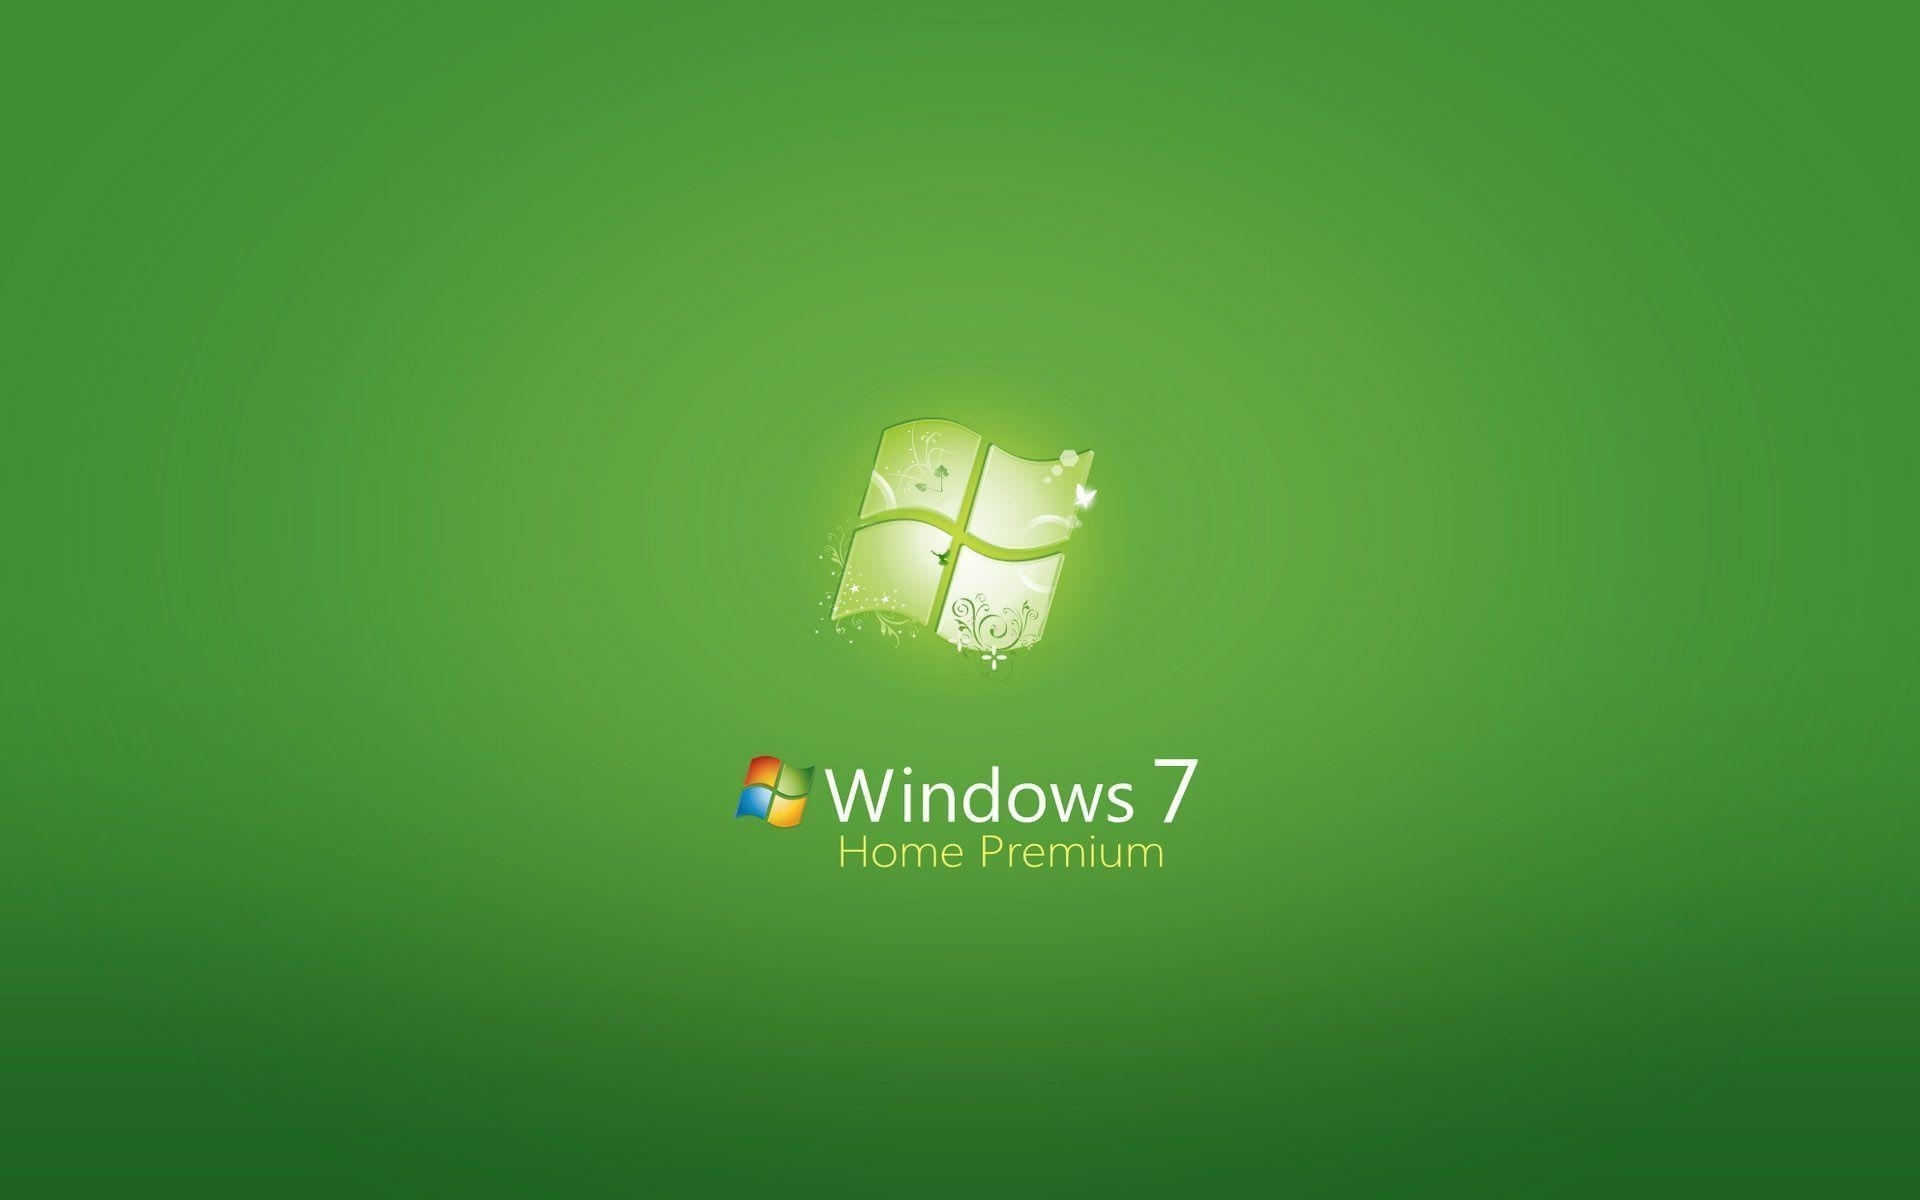 10 Best Windows 7 Home Premium Wallpaper Full Hd 1920×1080 Windows 7